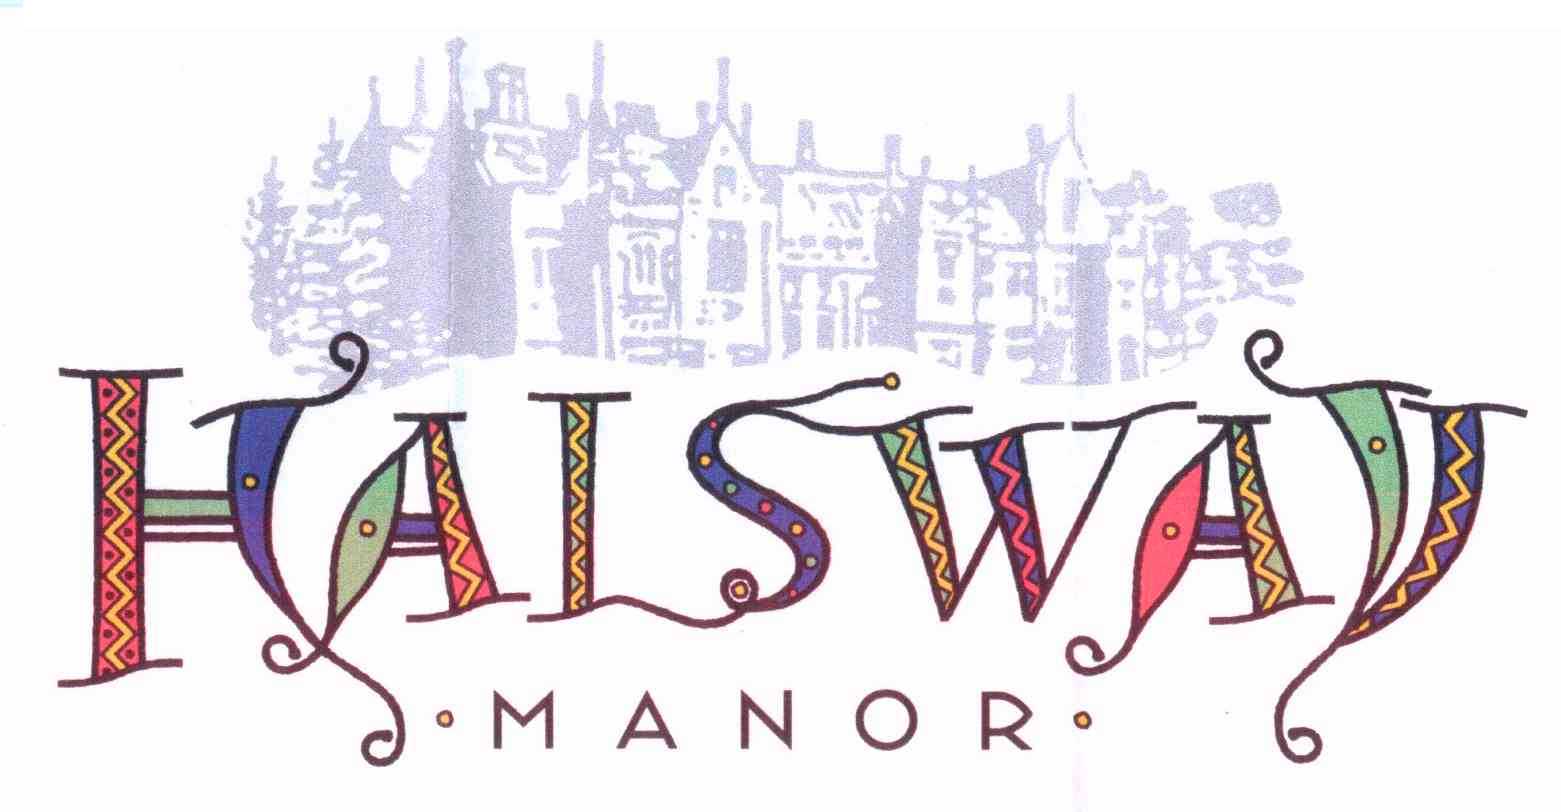 Halsway Manor